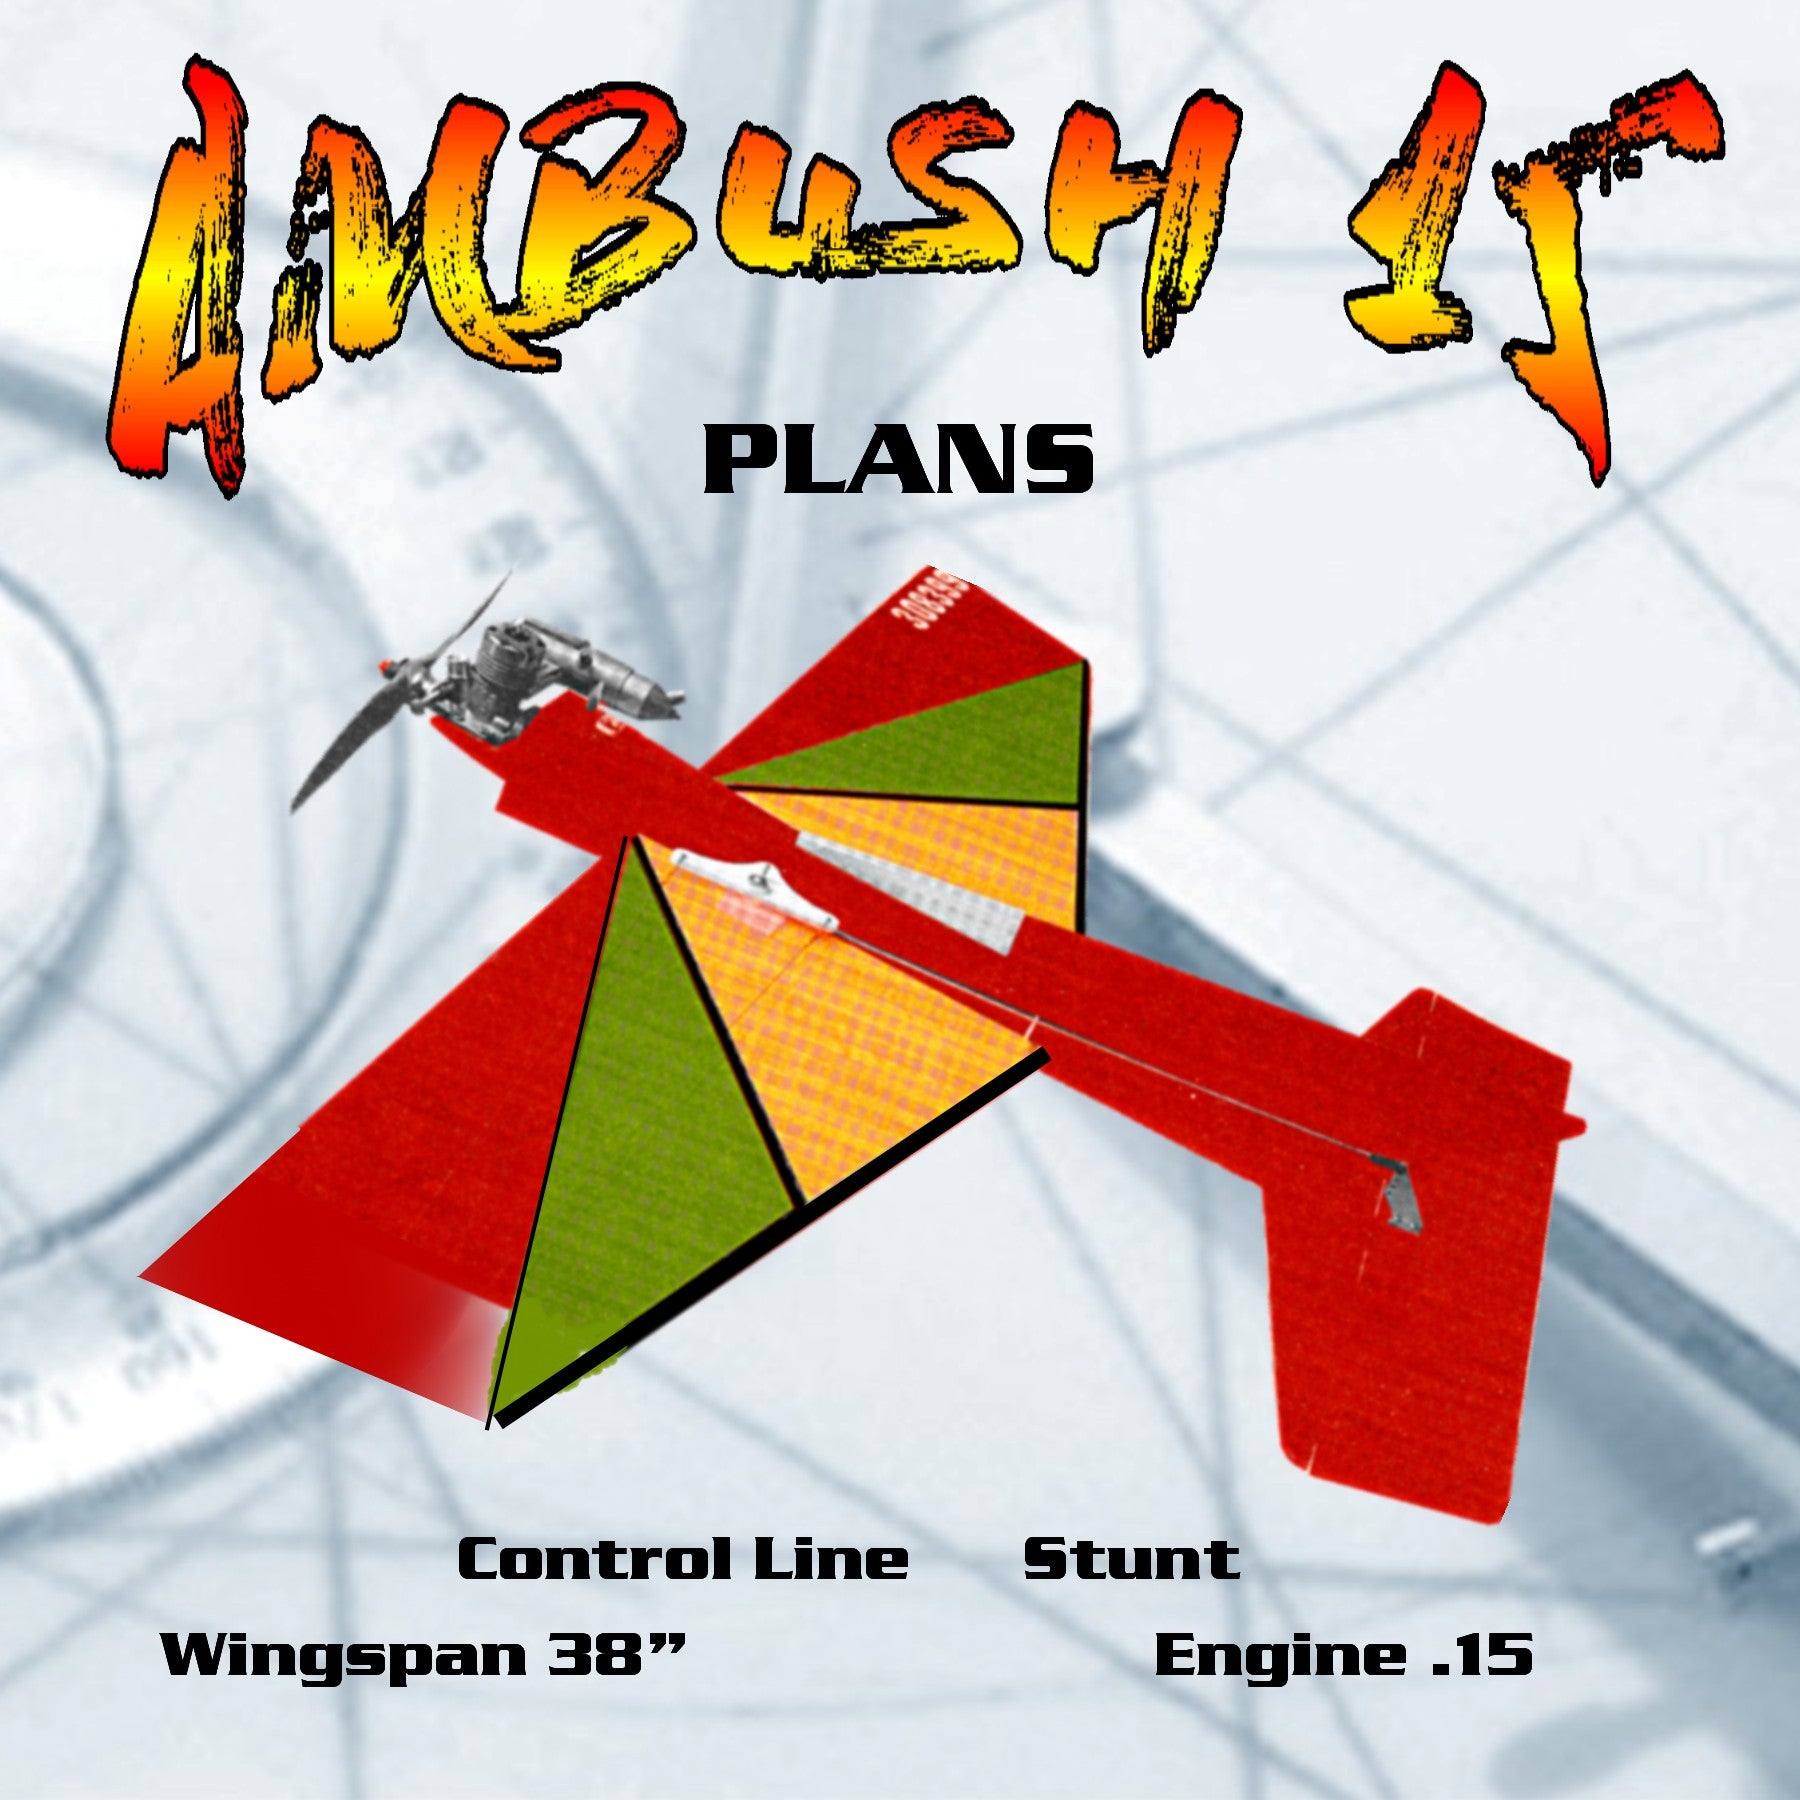 full size printed plans  control line stunt wingspan 38”  engine .15  ambush 15 by allen w. brickhaus